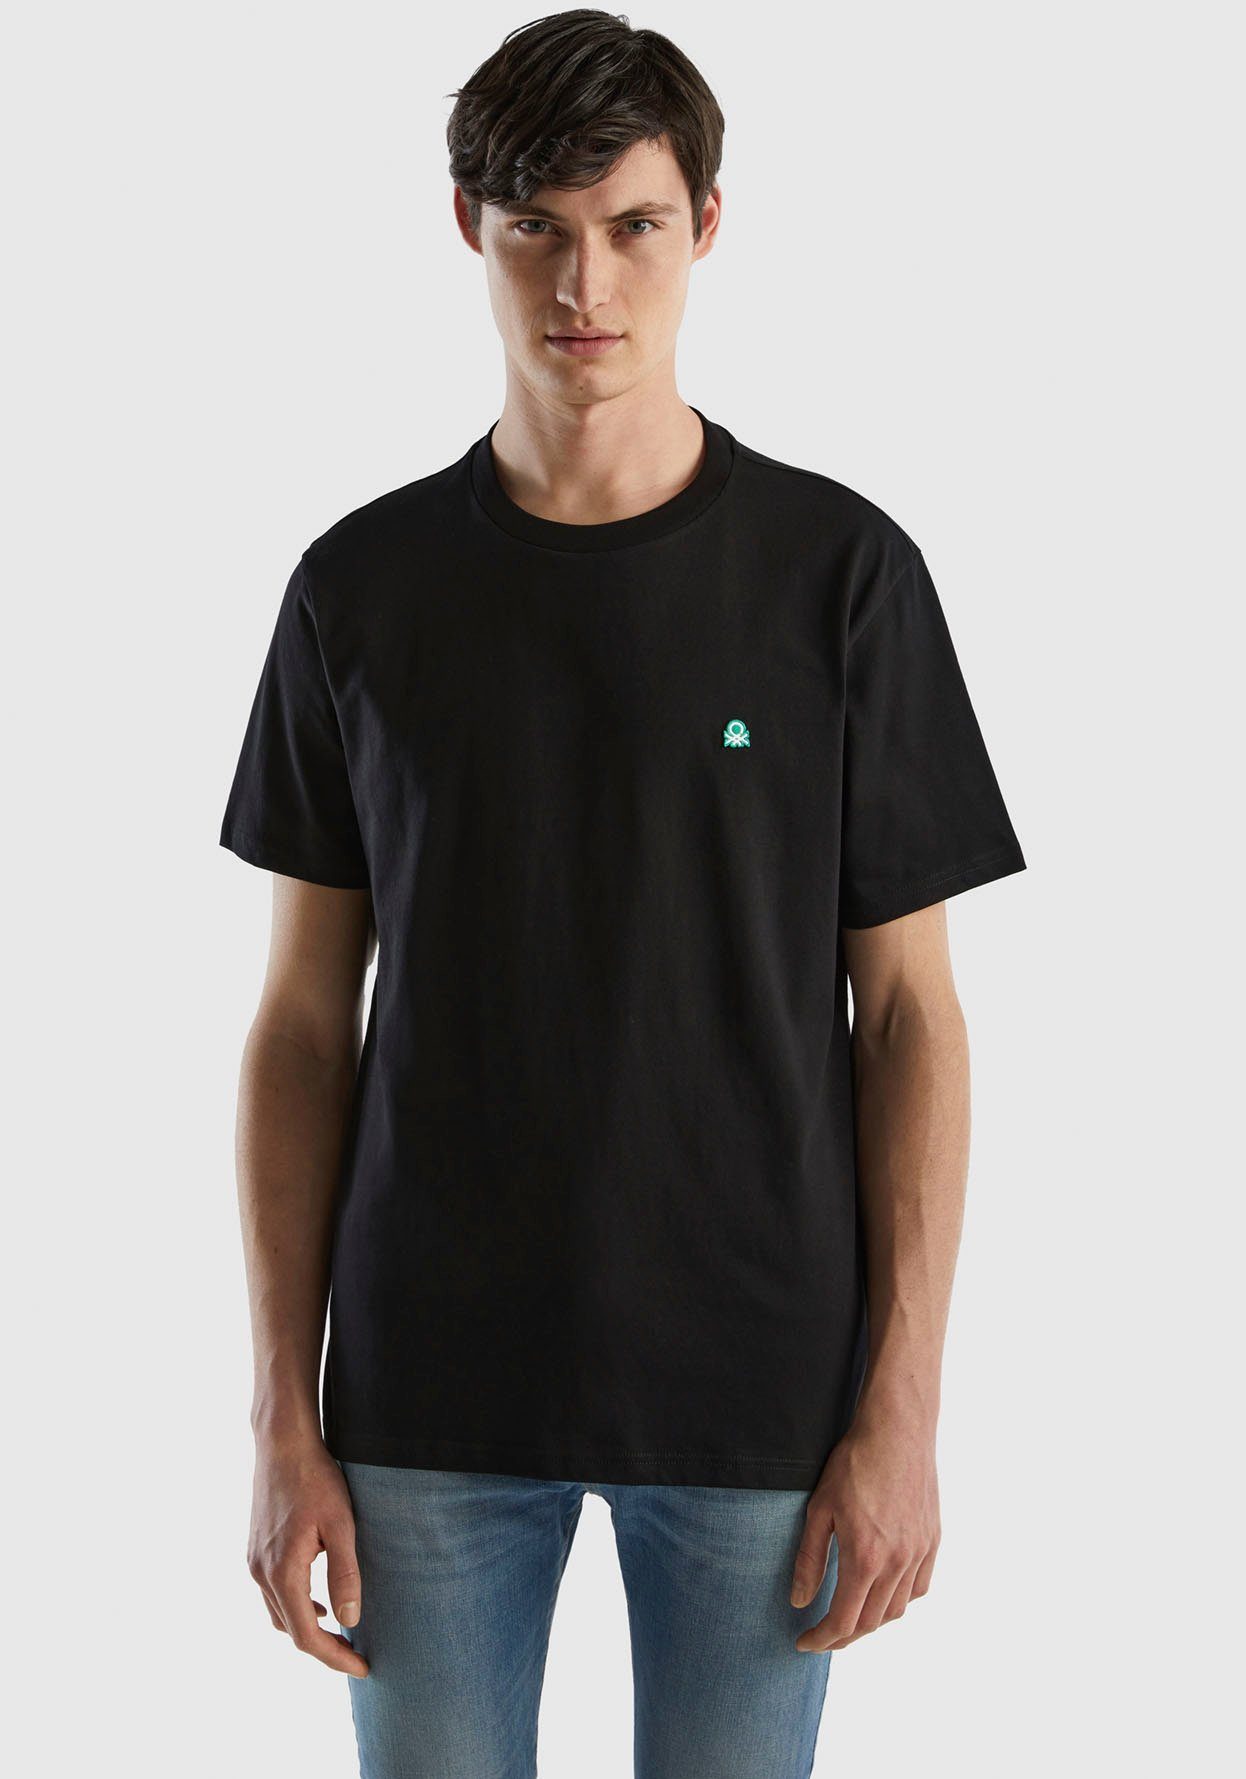 mit T-Shirt of schwarz United Label-Badge Colors Benetton